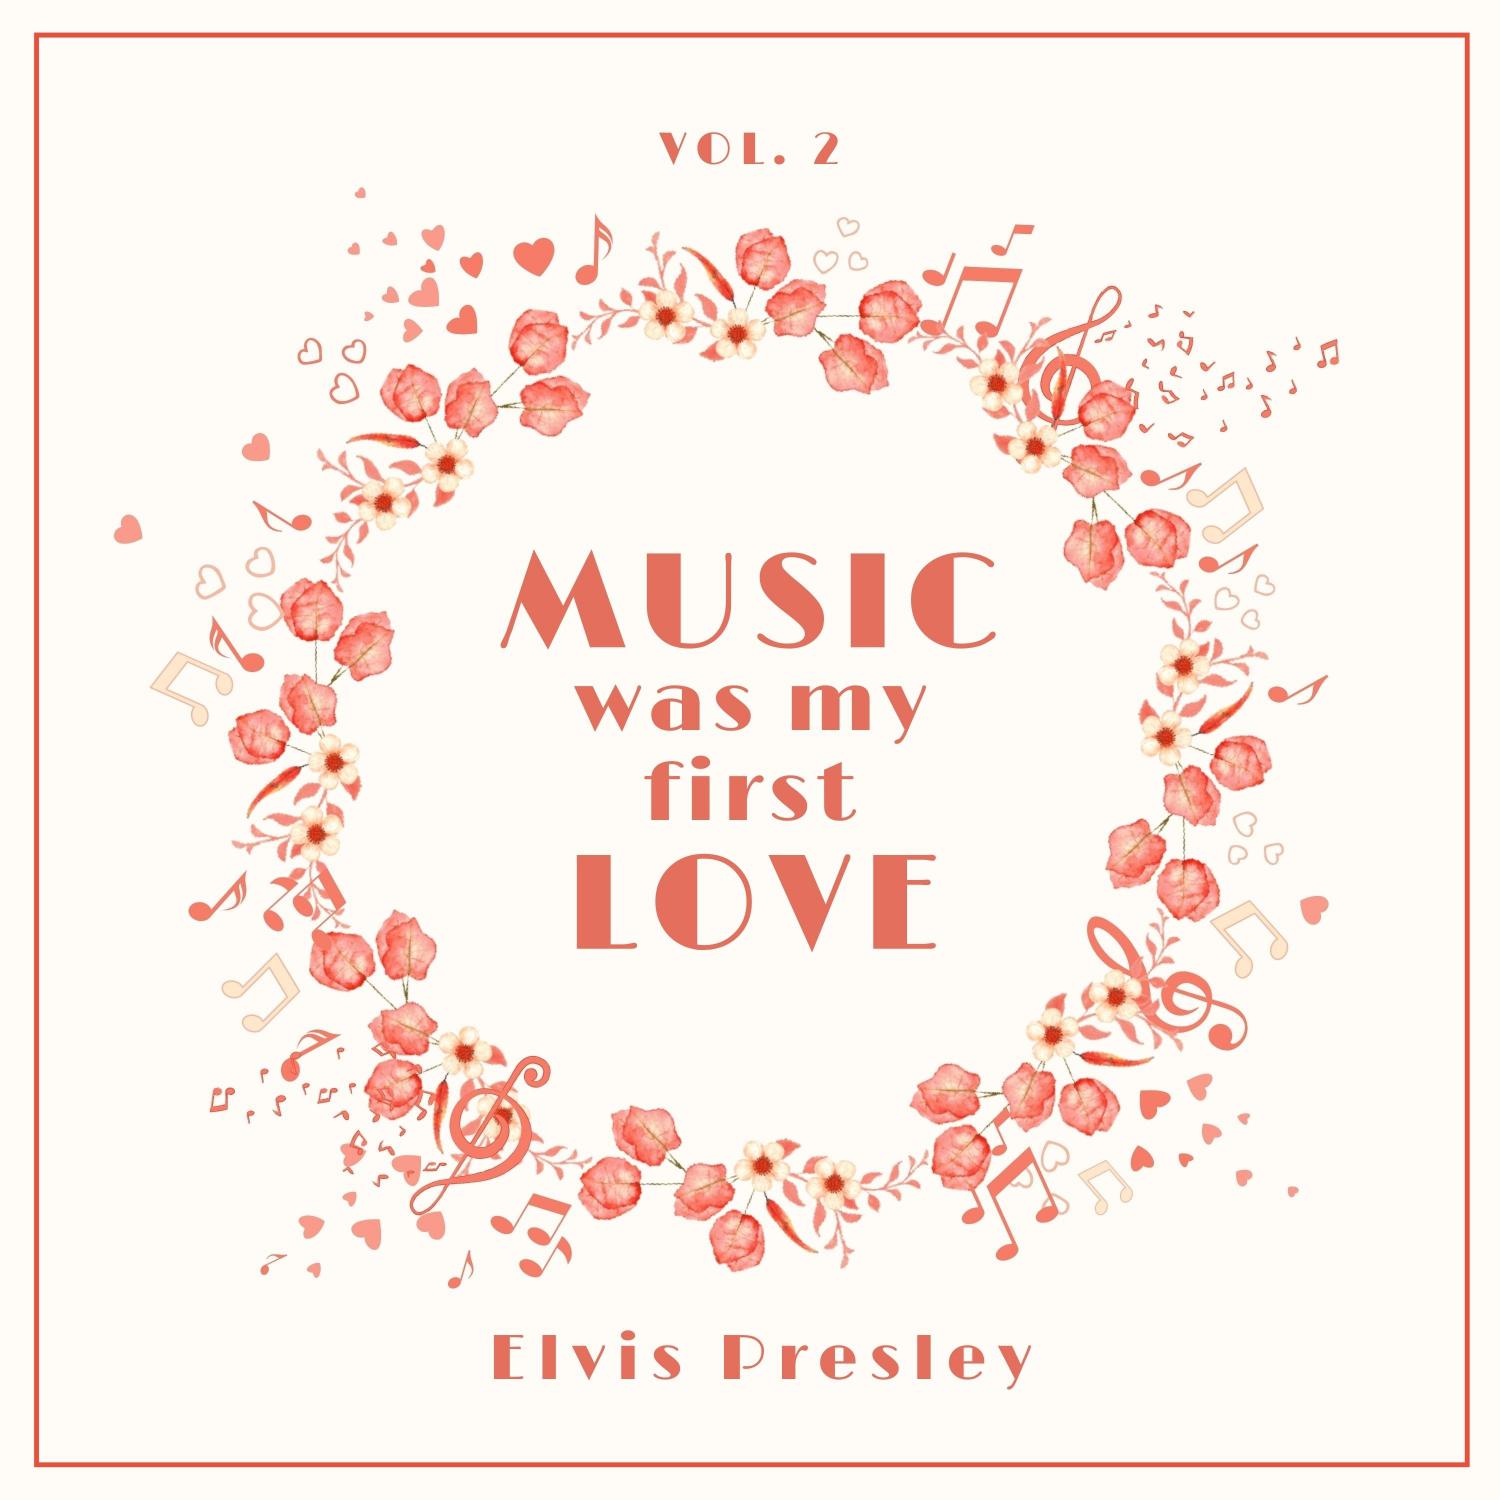 Elvis Presley - Can't Help Falling in Love (Original Mix)